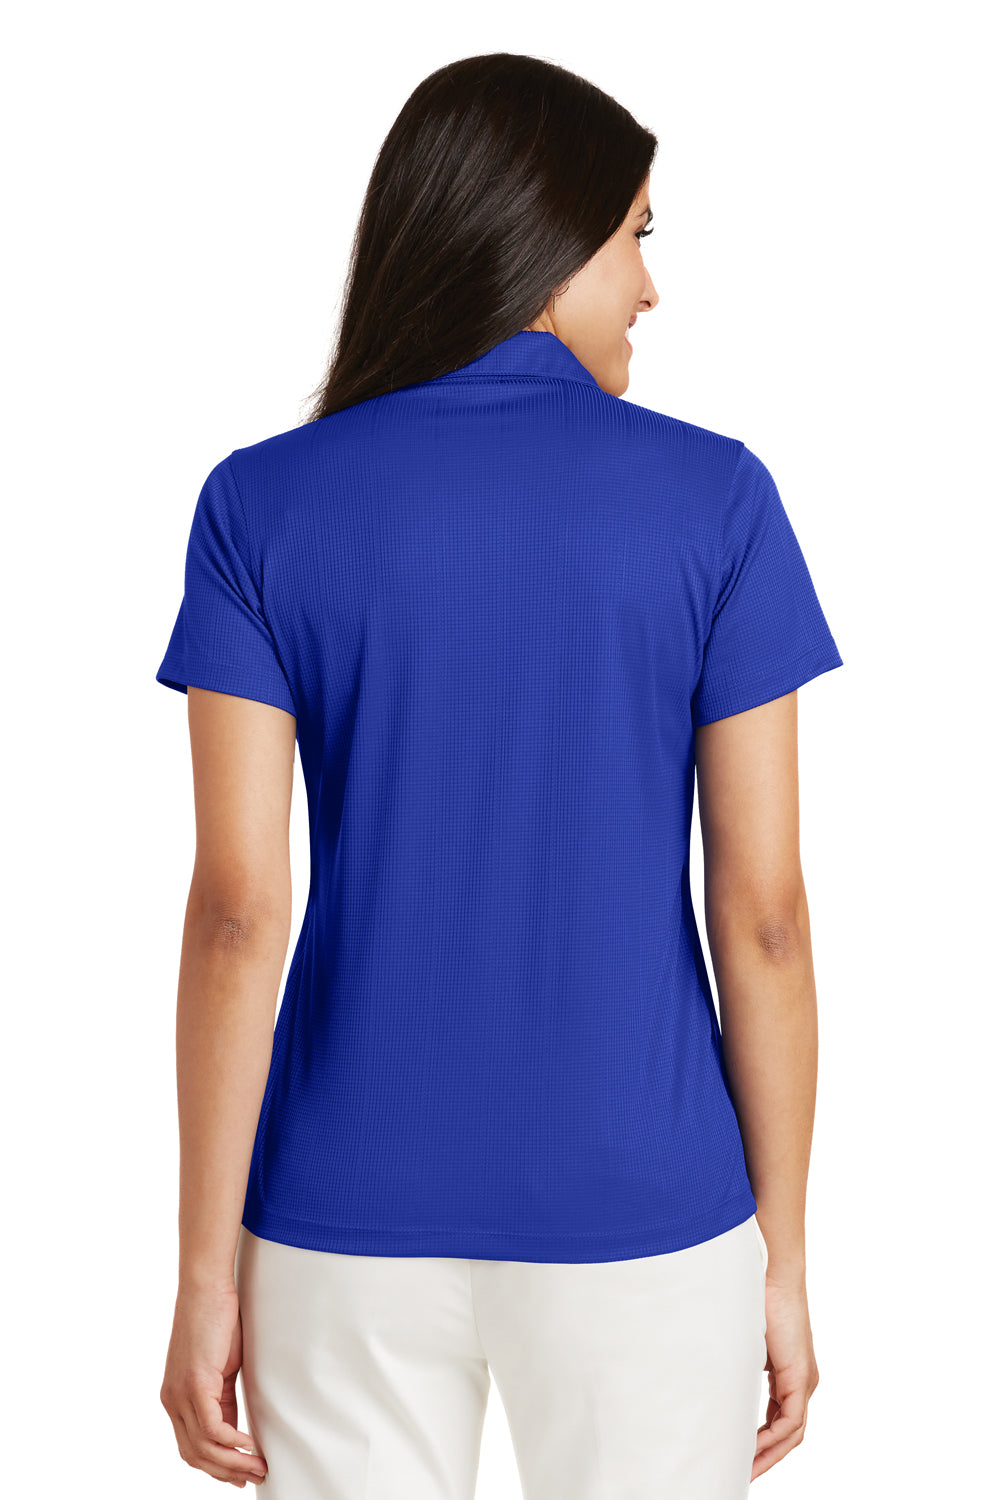 Port Authority L528 Womens Performance Moisture Wicking Short Sleeve Polo Shirt Royal Blue Back